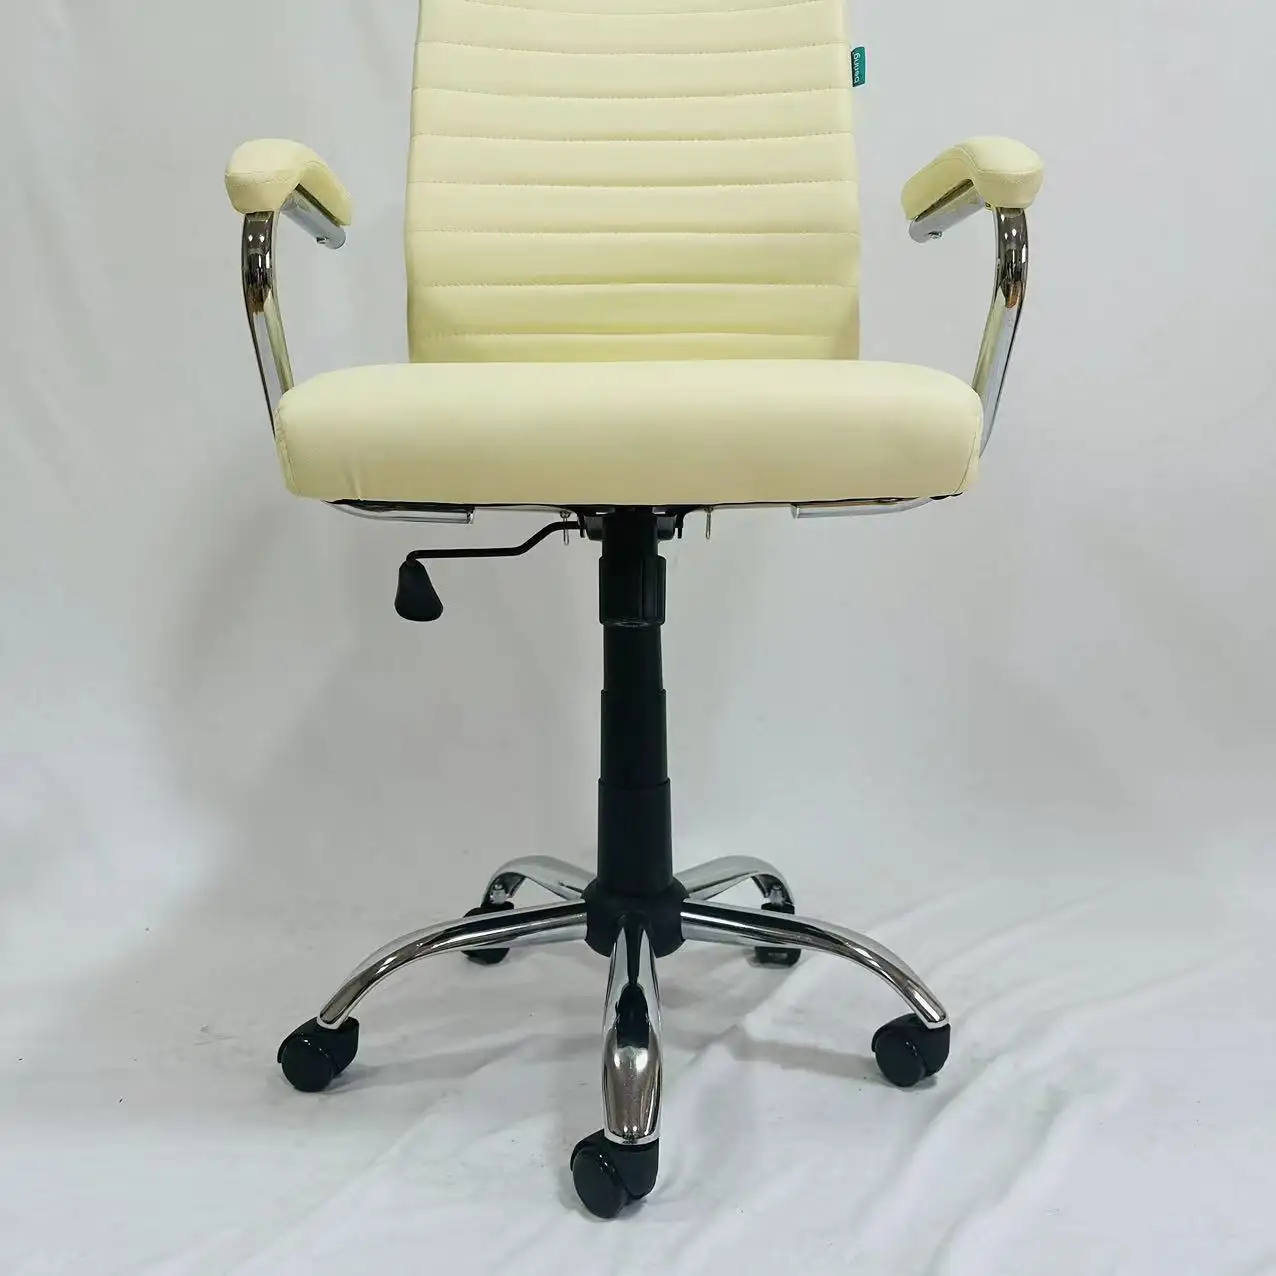 Ergonomie plastique PP PU cuir maille tissu or fer métal jambe patron bras pivotant Ikea chaise de bureau